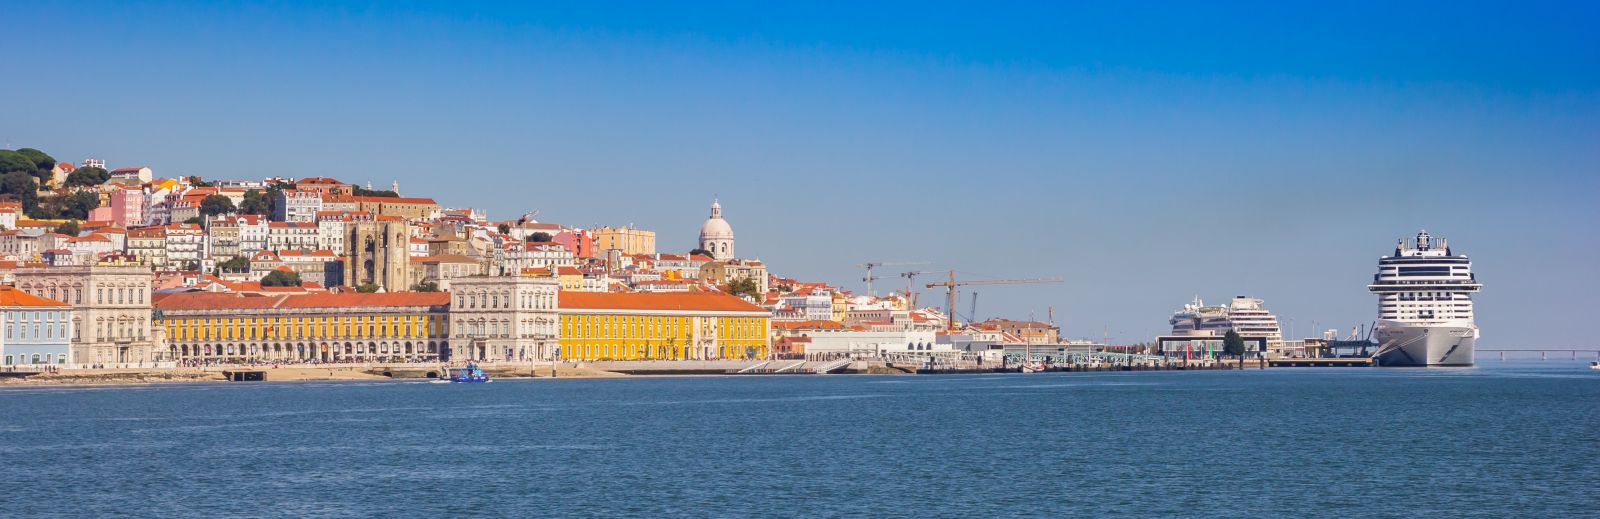 Cruise ship at Lisbon, Portugal